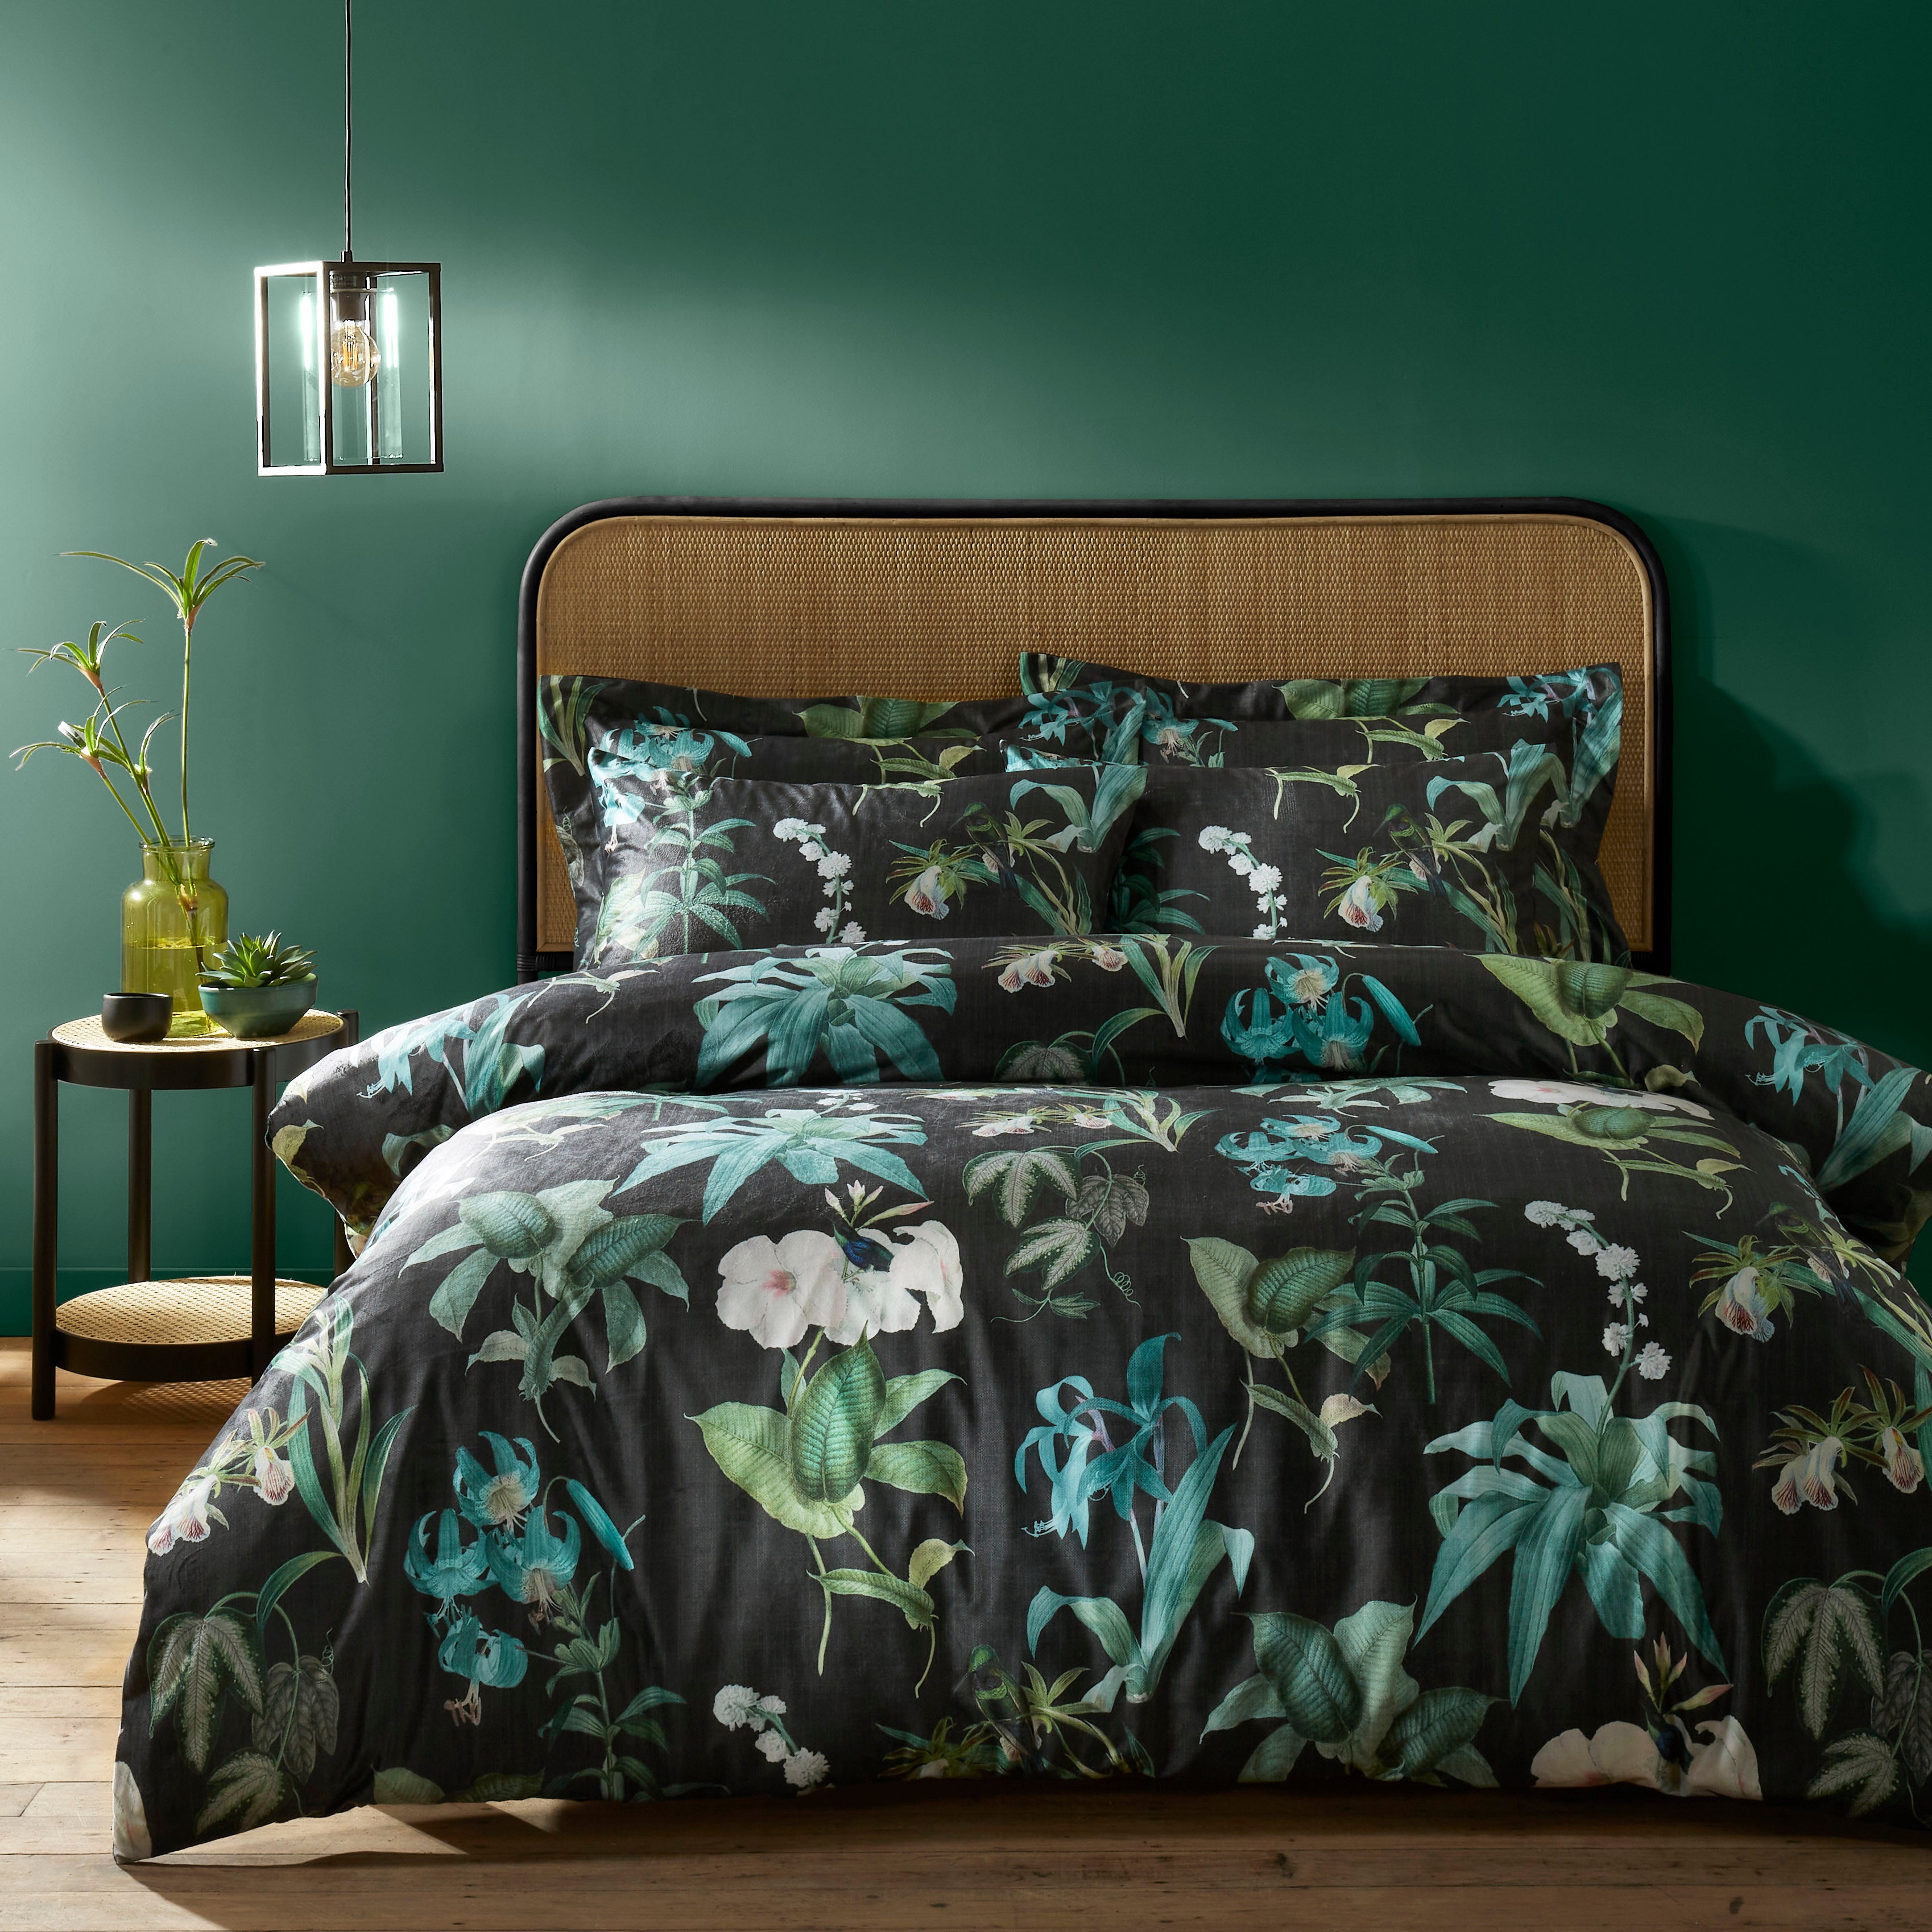 Iris Black Duvet Cover And Pillowcase Set Green